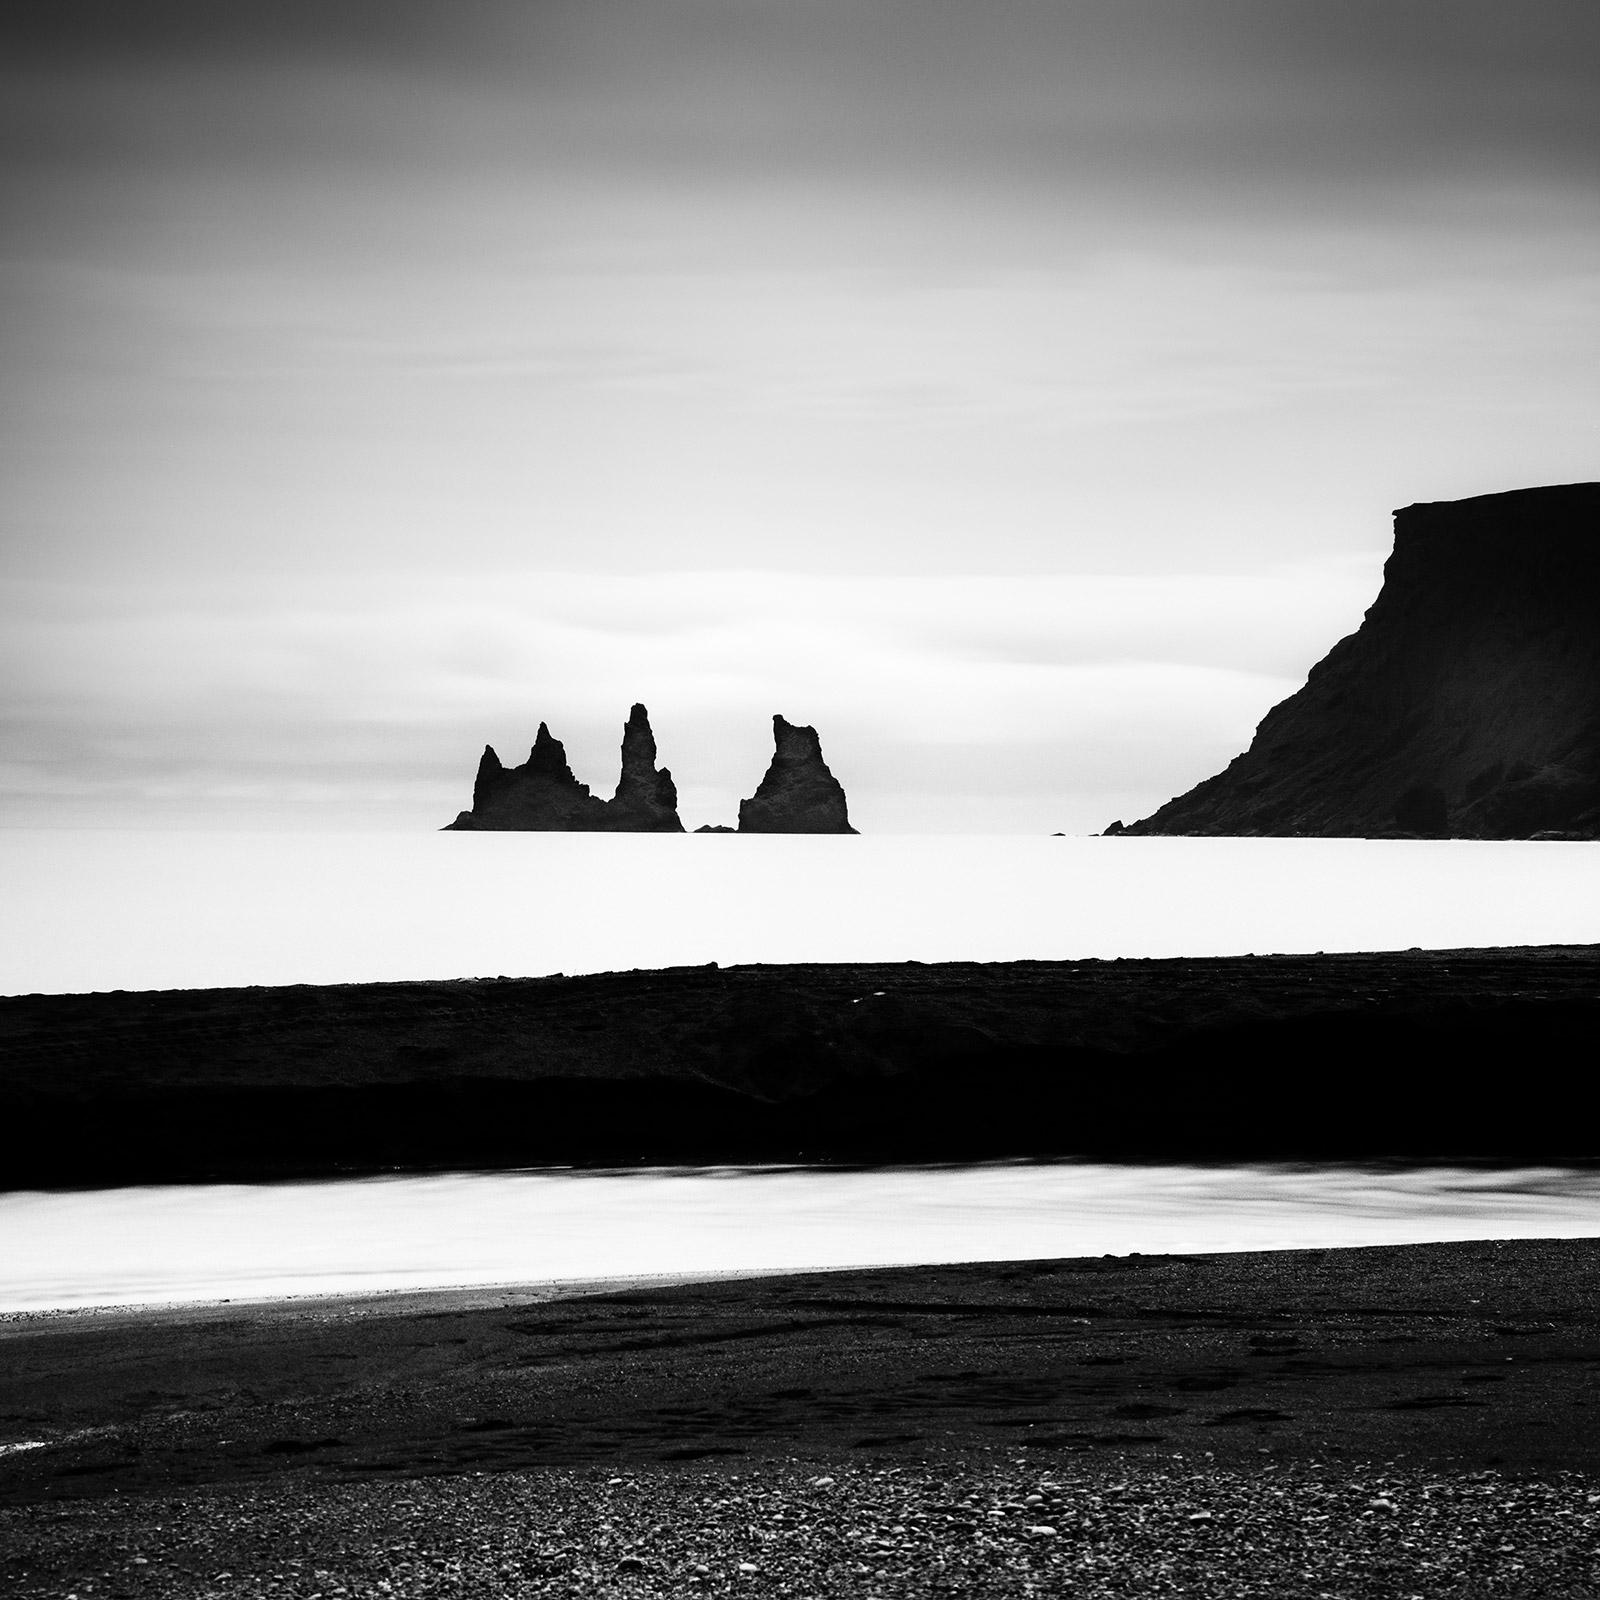 Black and White Photograph Gerald Berghammer - Reynisdrangar, plage de sable noir, Islande, photographie noir et blanc, paysage